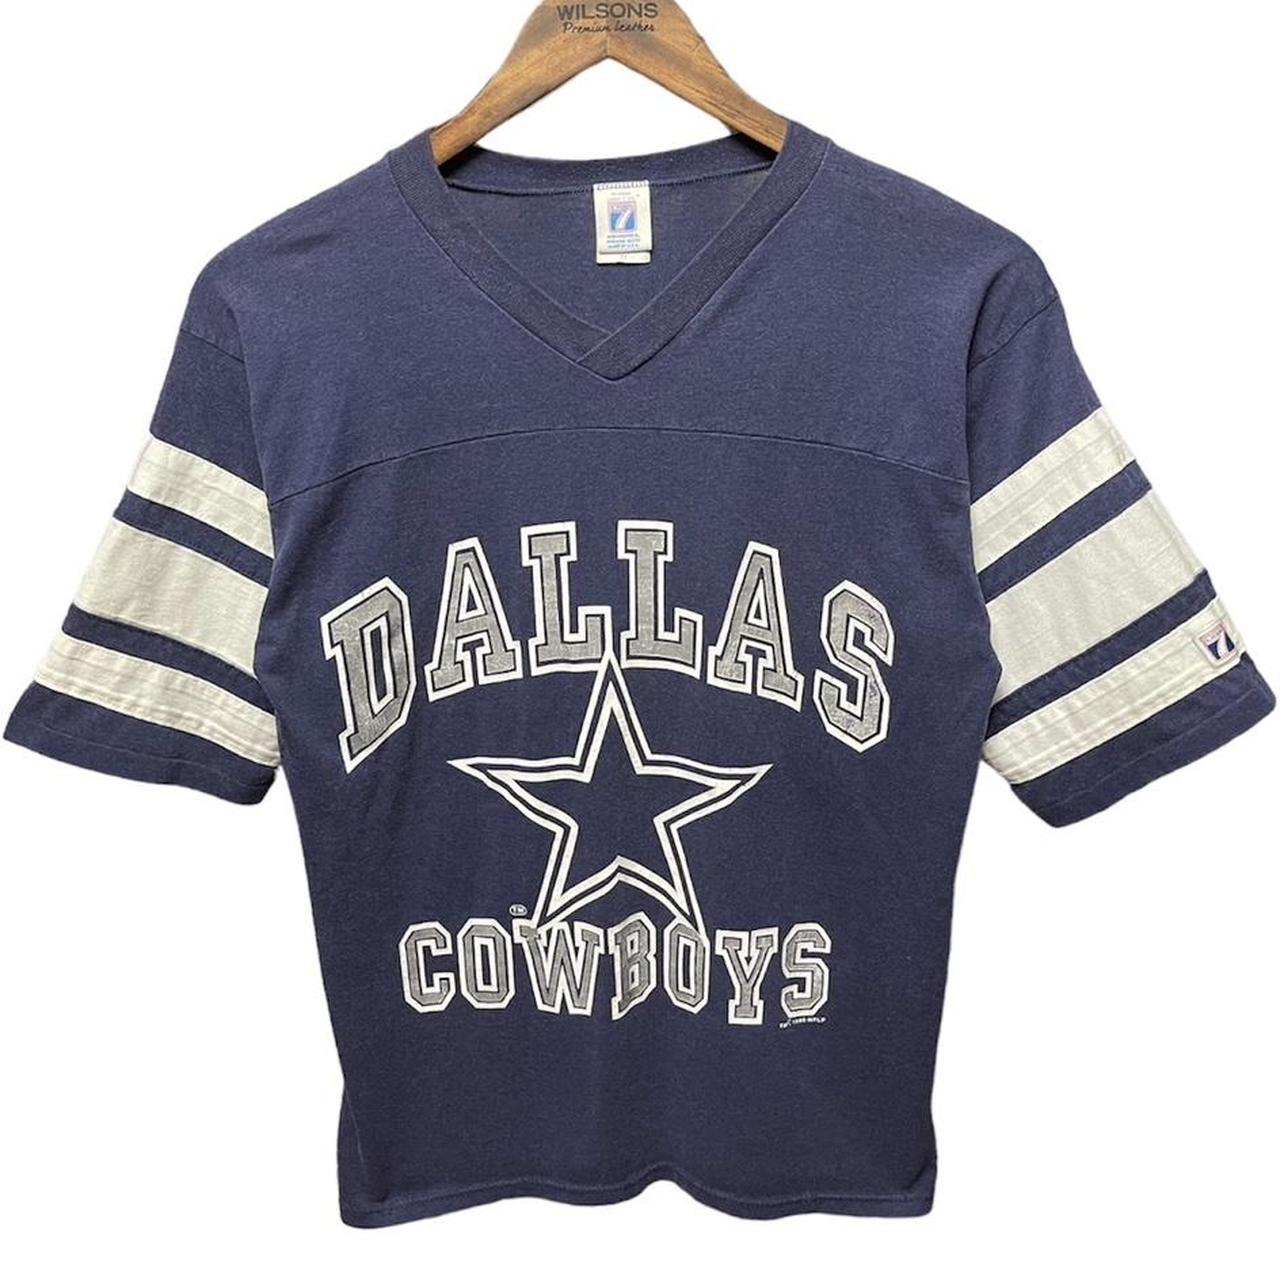 Vintage NFL Sports Teams Navy Blue Sports T Shirt Size Large